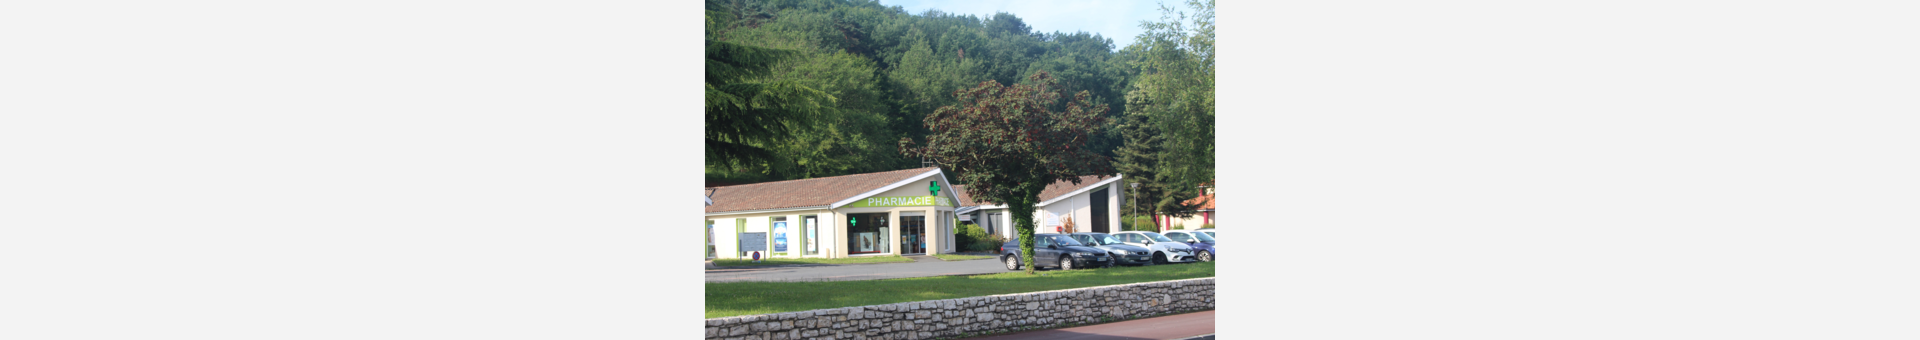 Pharmacie de Marsac,Marsac-sur-l'Isle